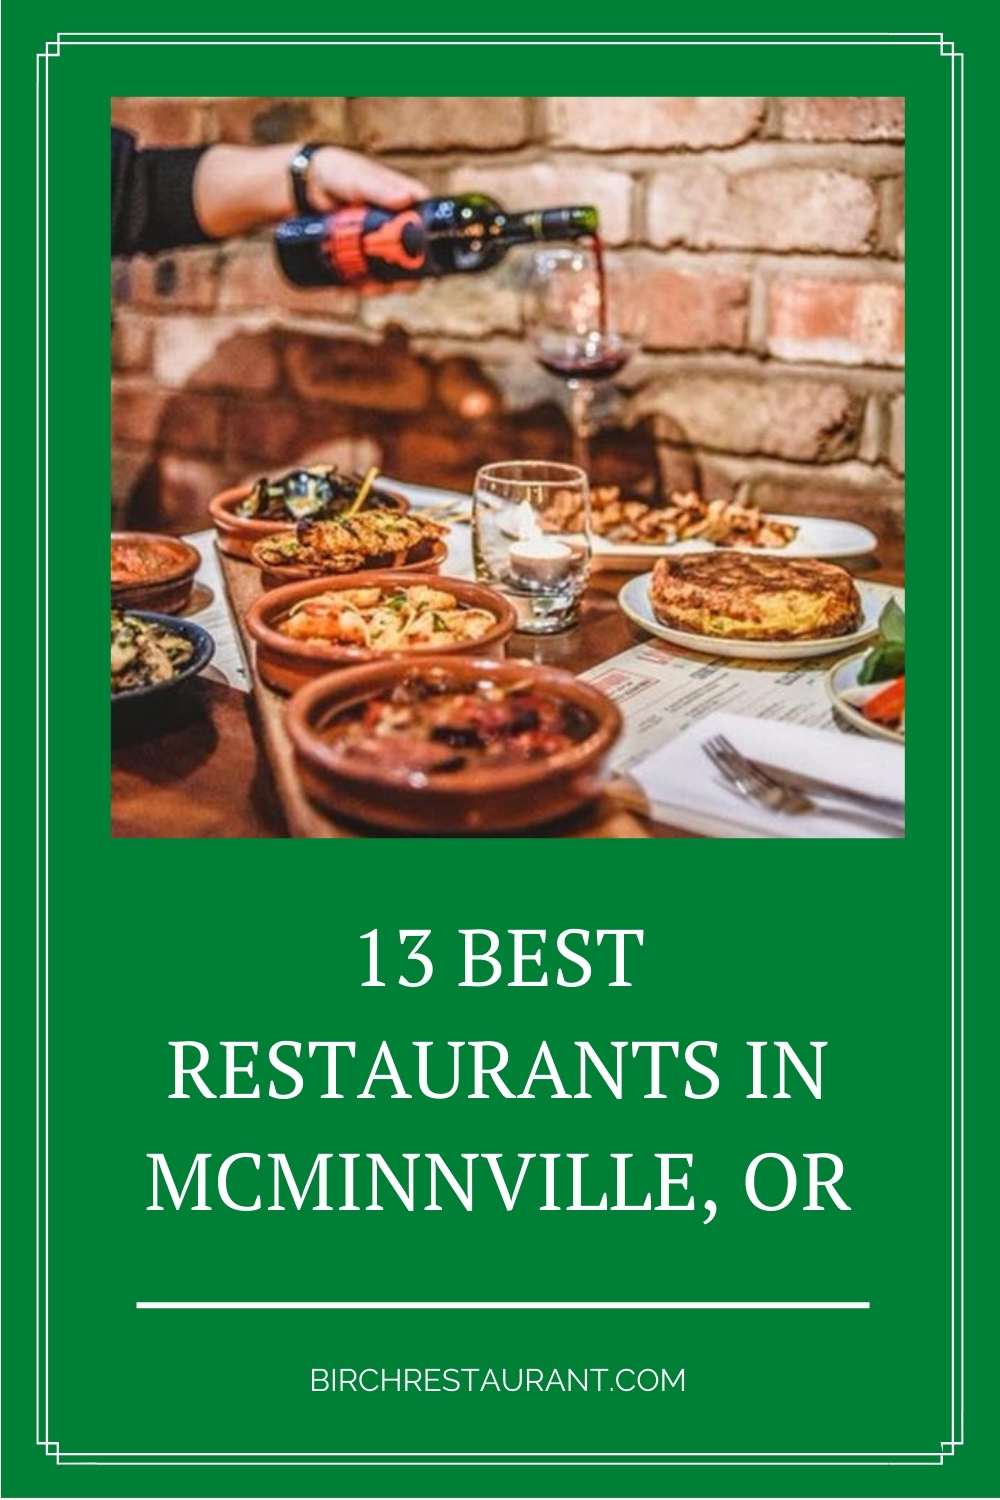 Best Restaurants in McMinnville